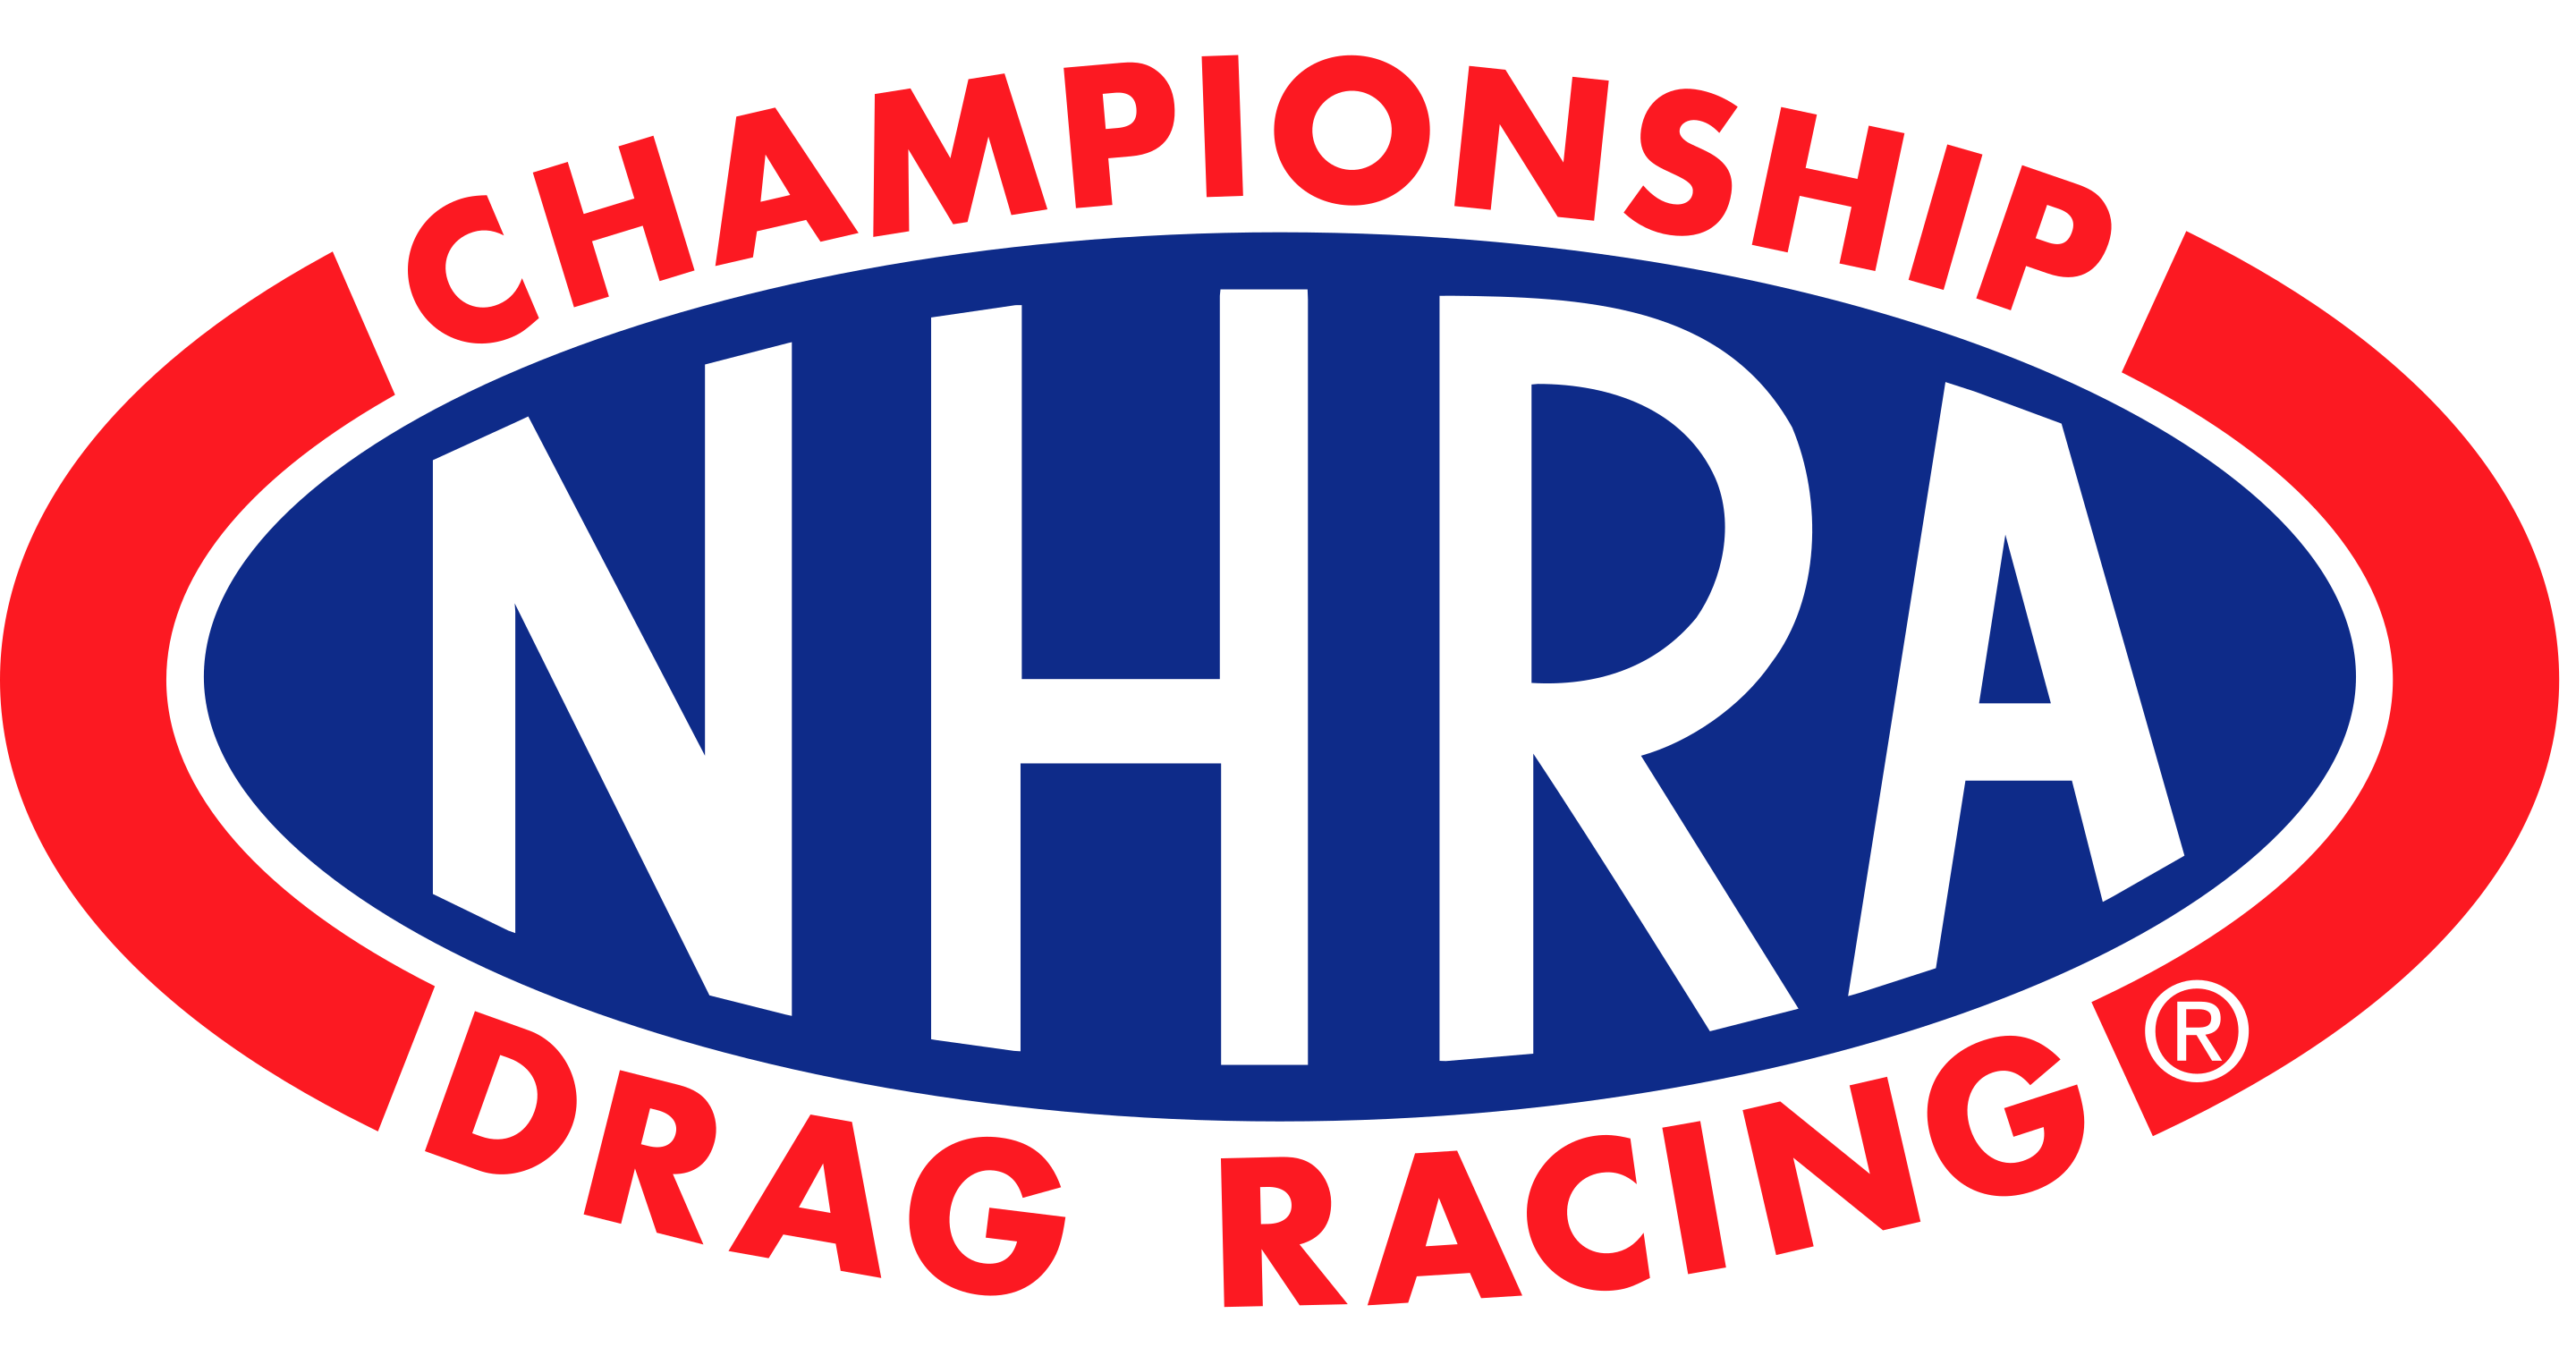 National Hot Rod Association Logo
